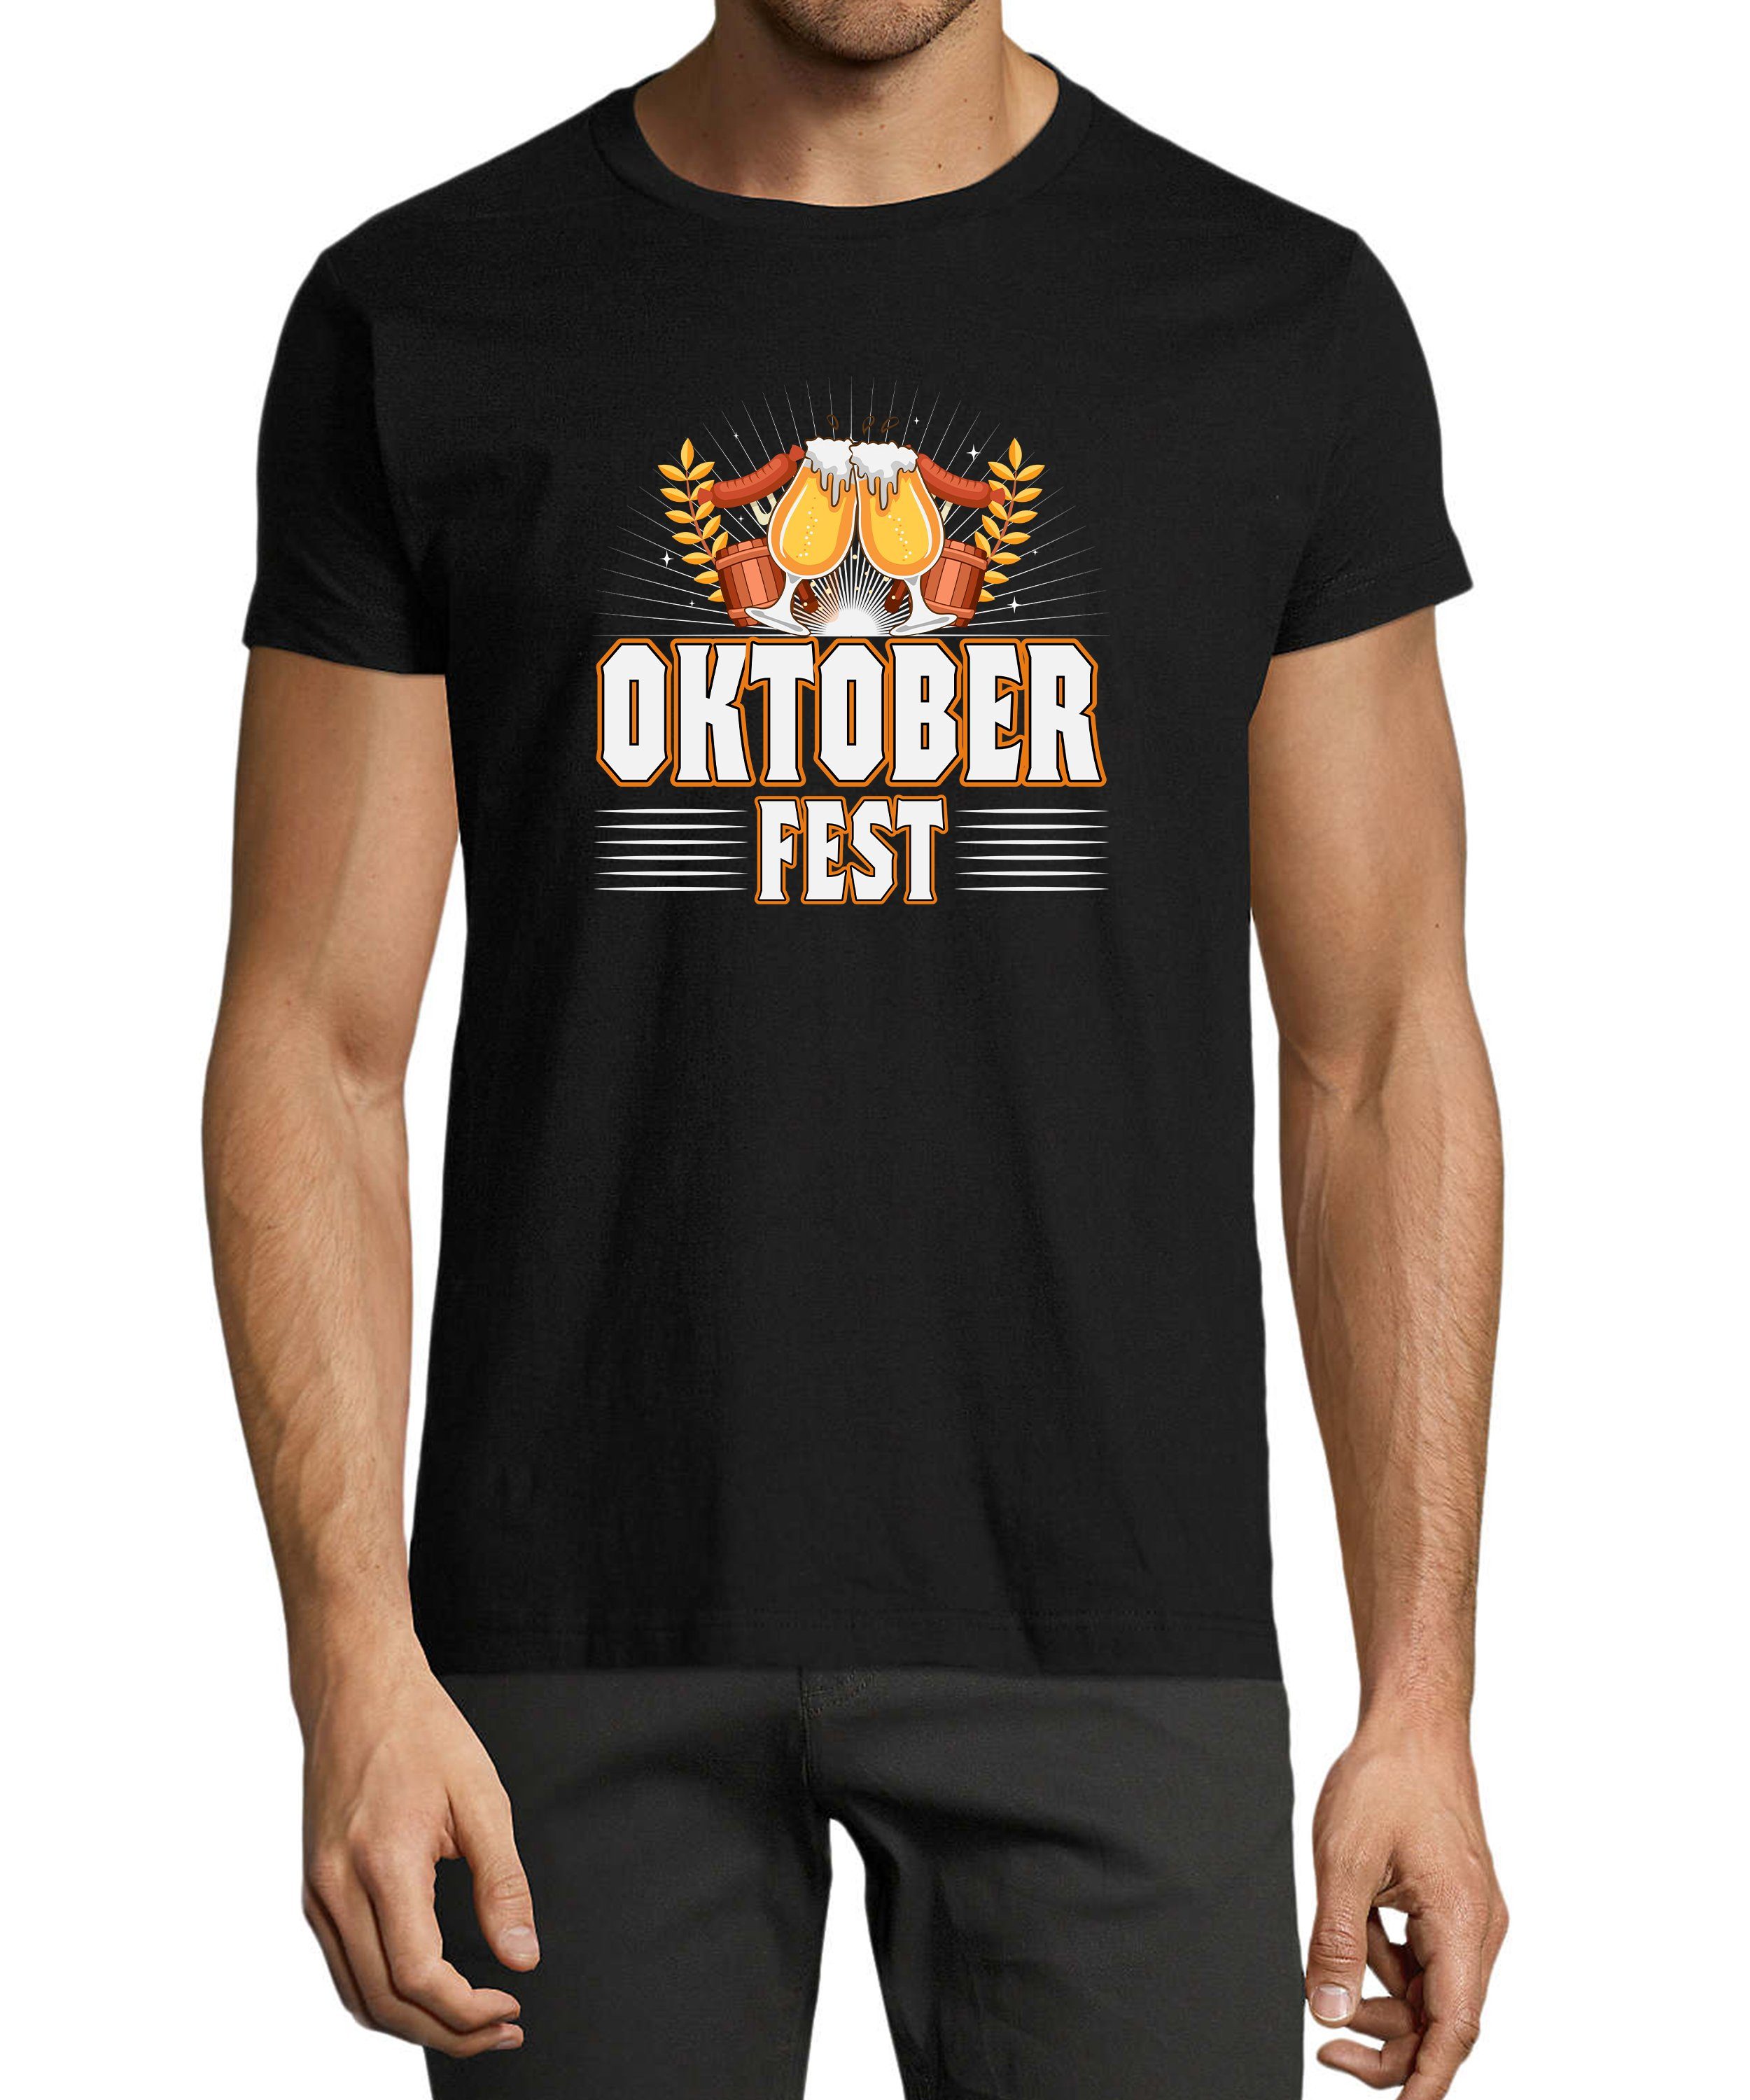 MyDesign24 T-Shirt Herren Party Shirt - Oktoberfest T-Shirt Baumwollshirt mit Aufdruck Regular Fit, i327 schwarz